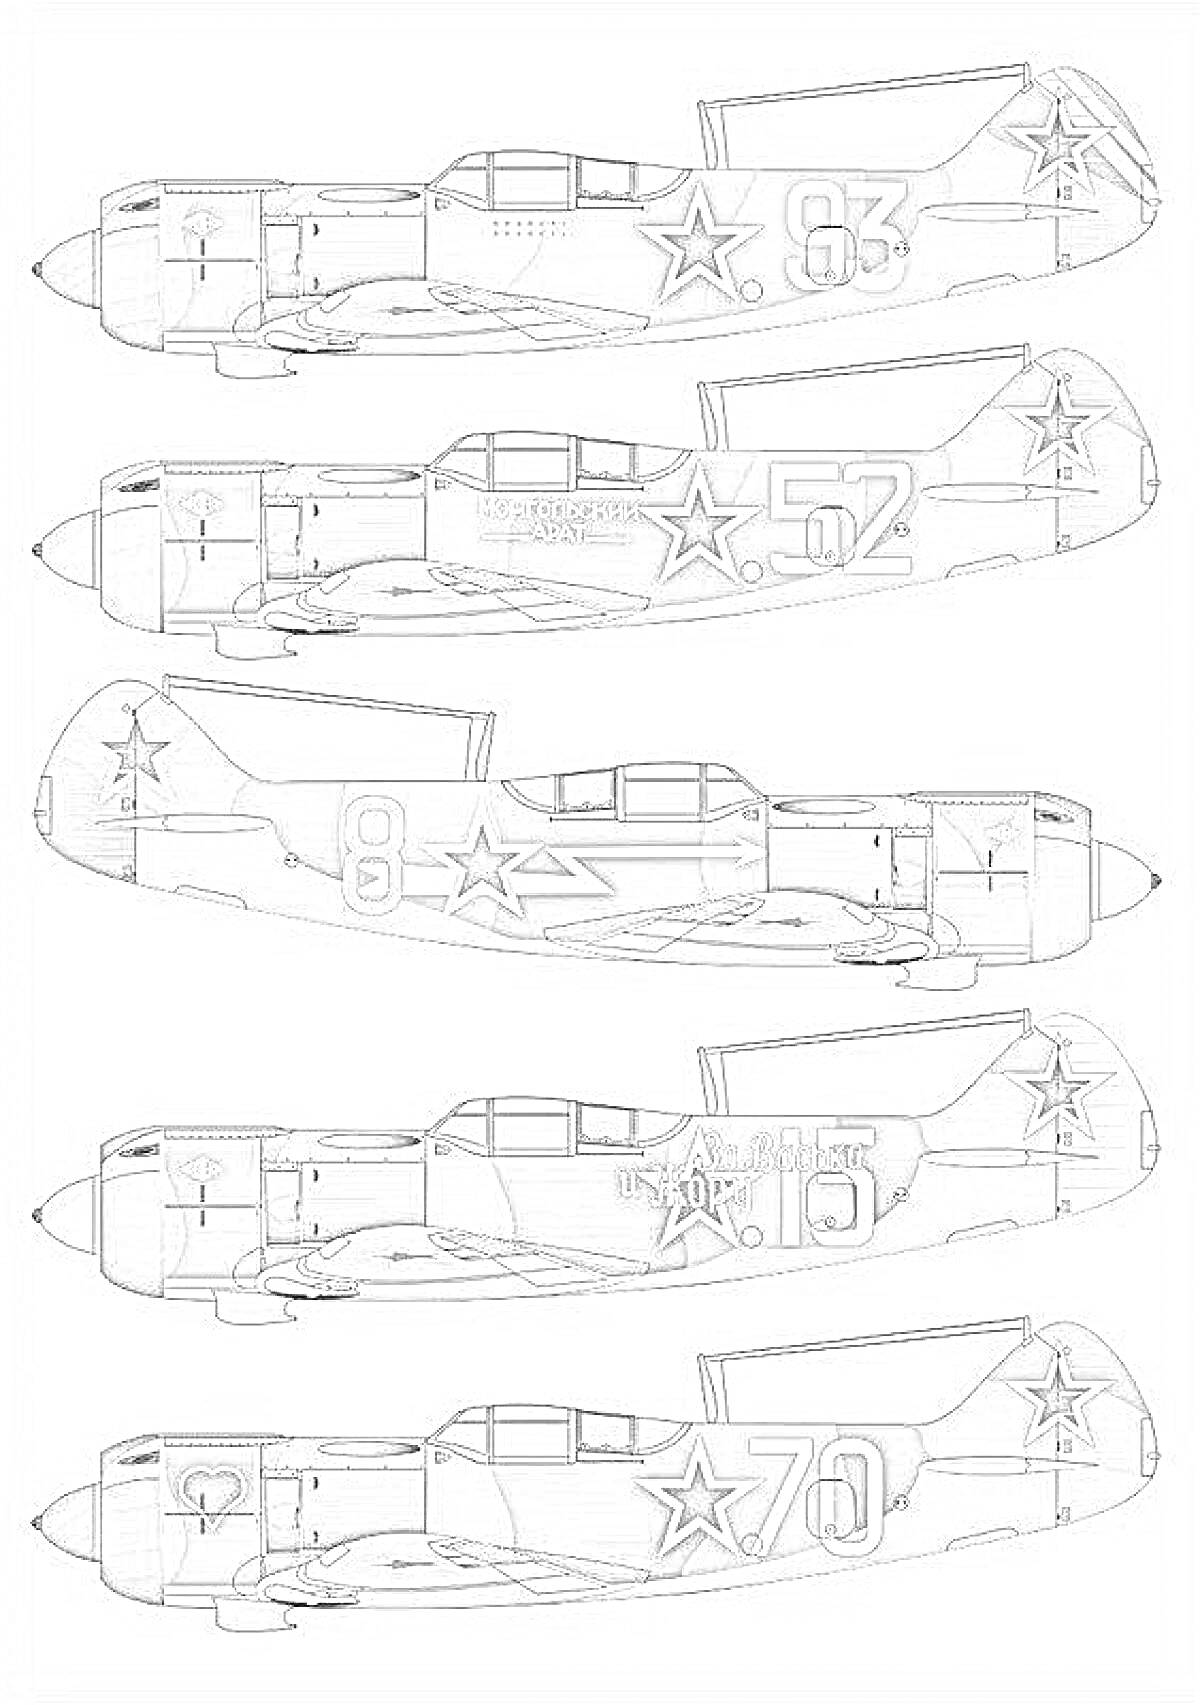 Раскраска Ла-5ФН с номерами на корпусе 93, 52, 1, 15 и 70, звездами и символами на хвостовой части.